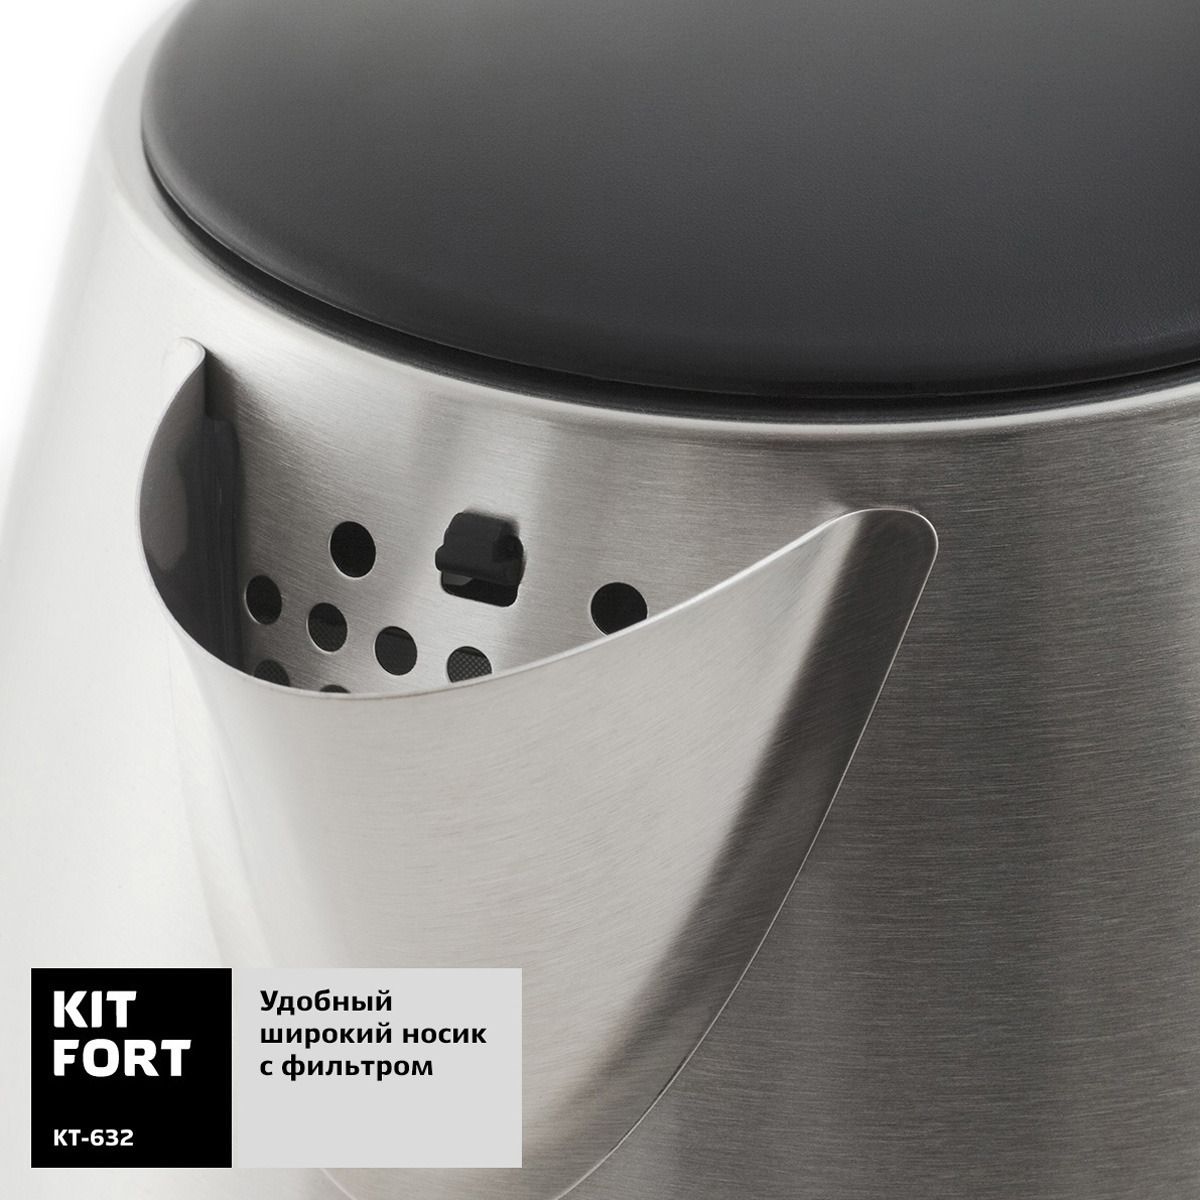   Kitfort -632, Silver